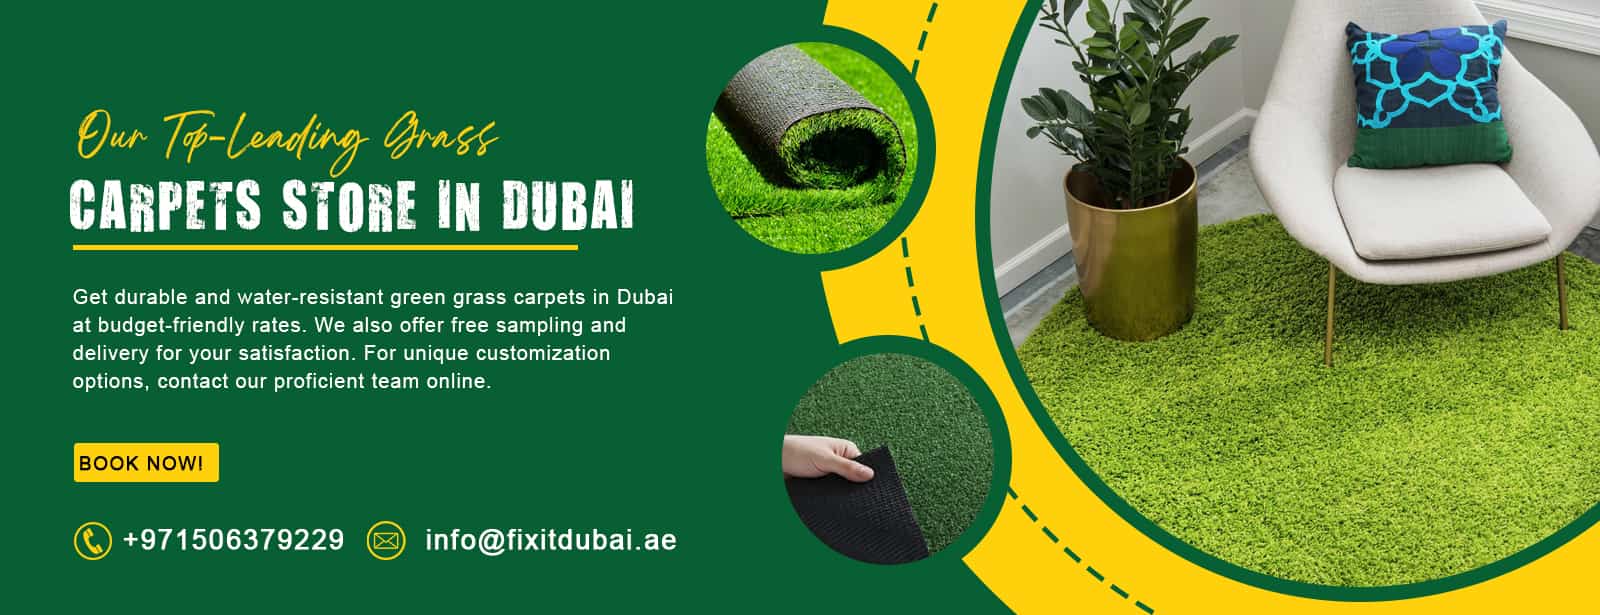 Our Top-Leading Grass Carpets Store In Dubai fixitdubai banner